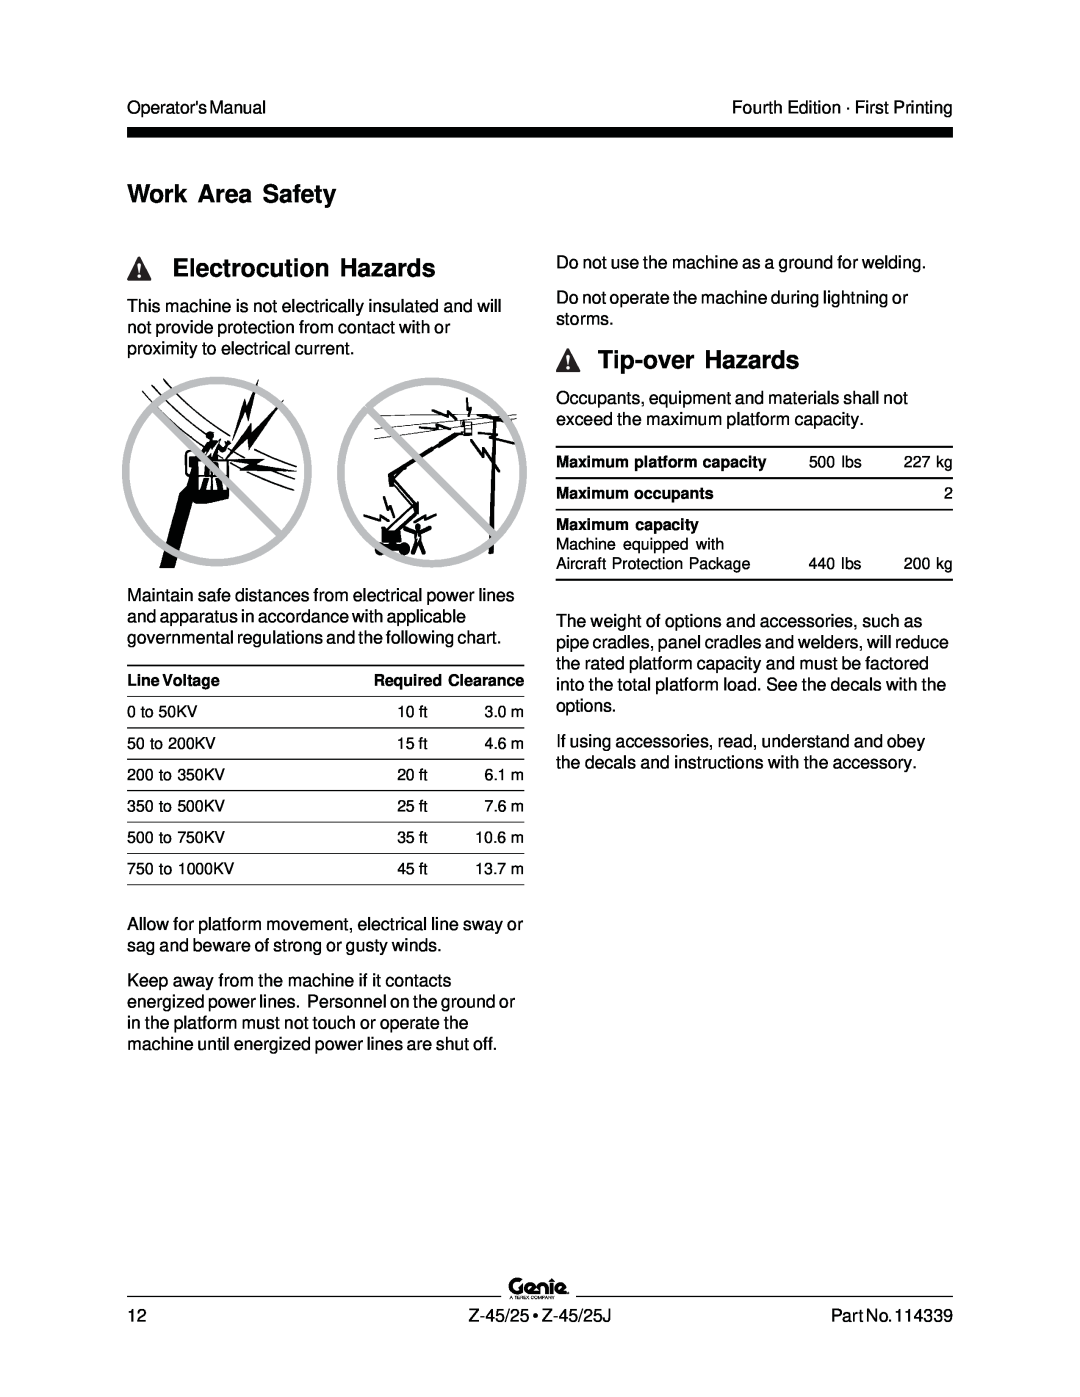 Genie Z-45, Z-25J manual Work Area Safety Electrocution Hazards, Tip-overHazards 